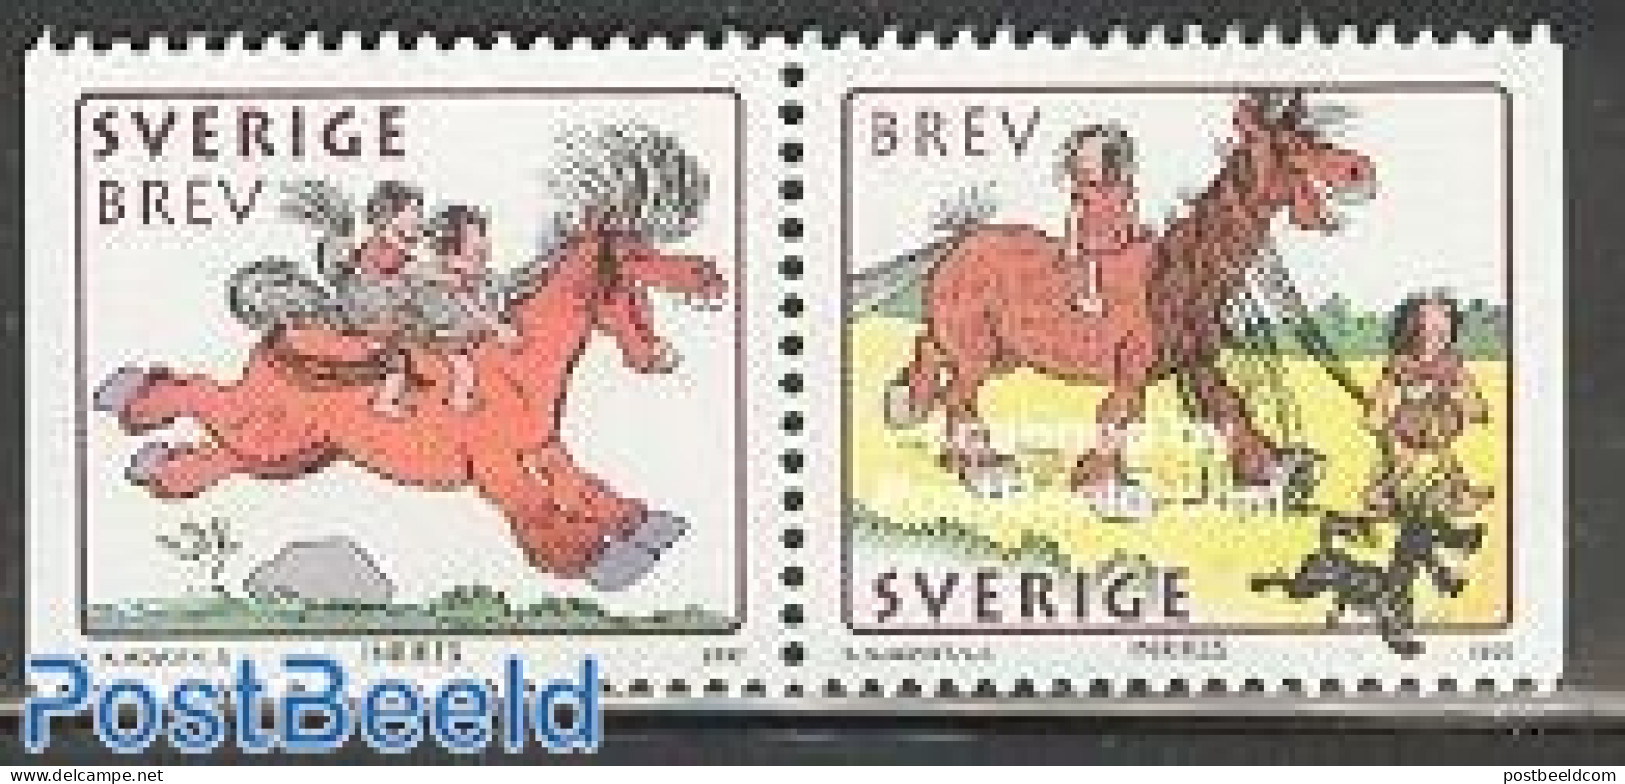 Sweden 2002 Comics, Fairhai 2v [:], Mint NH, Nature - Dogs - Horses - Art - Comics (except Disney) - Ungebraucht